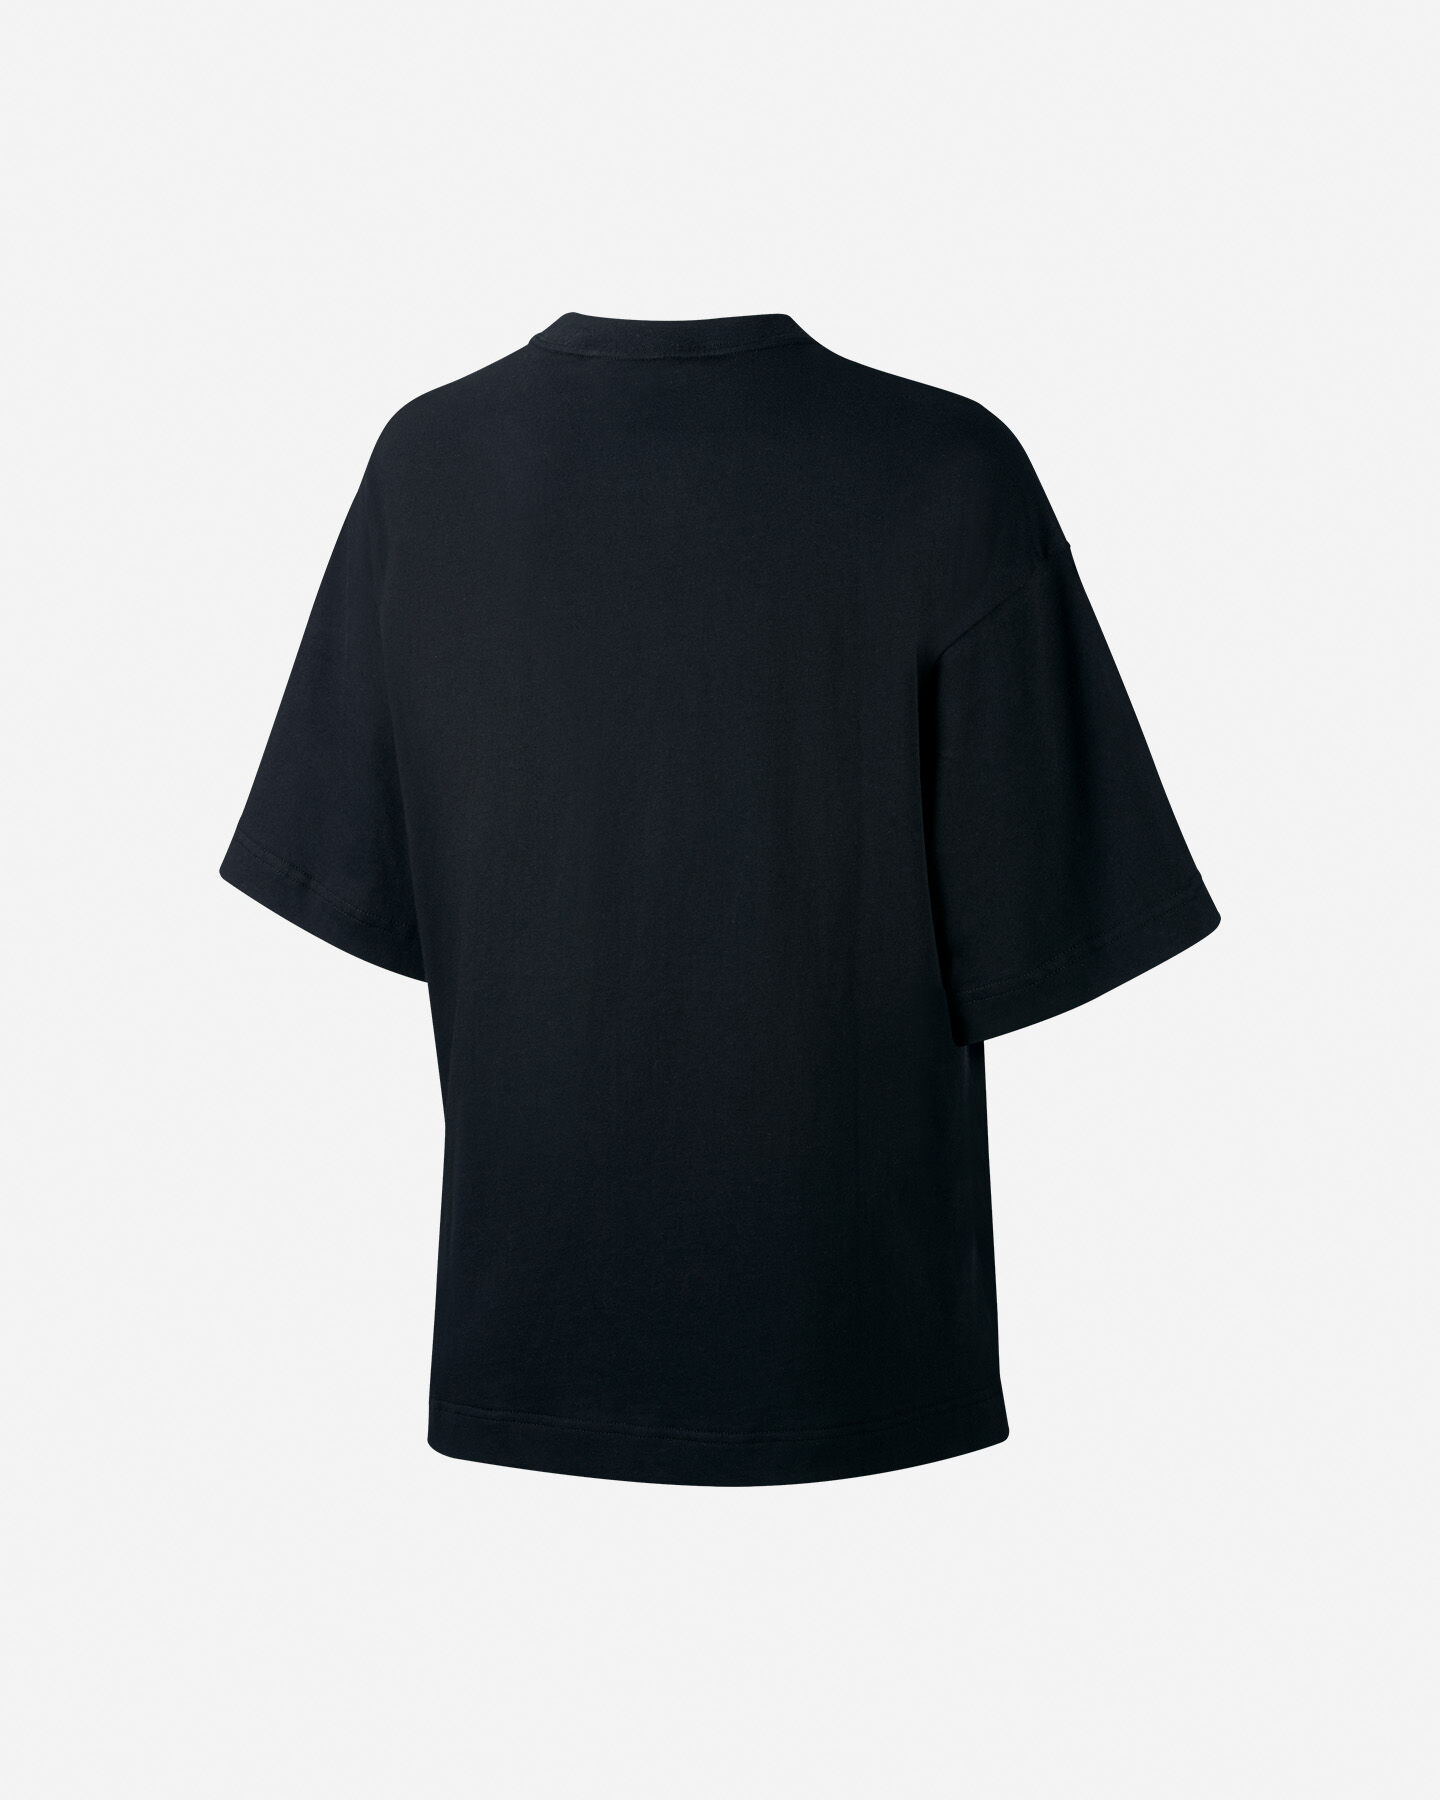  T-Shirt NIKE AIR BIG LOGO W S5164100|010|XS scatto 1